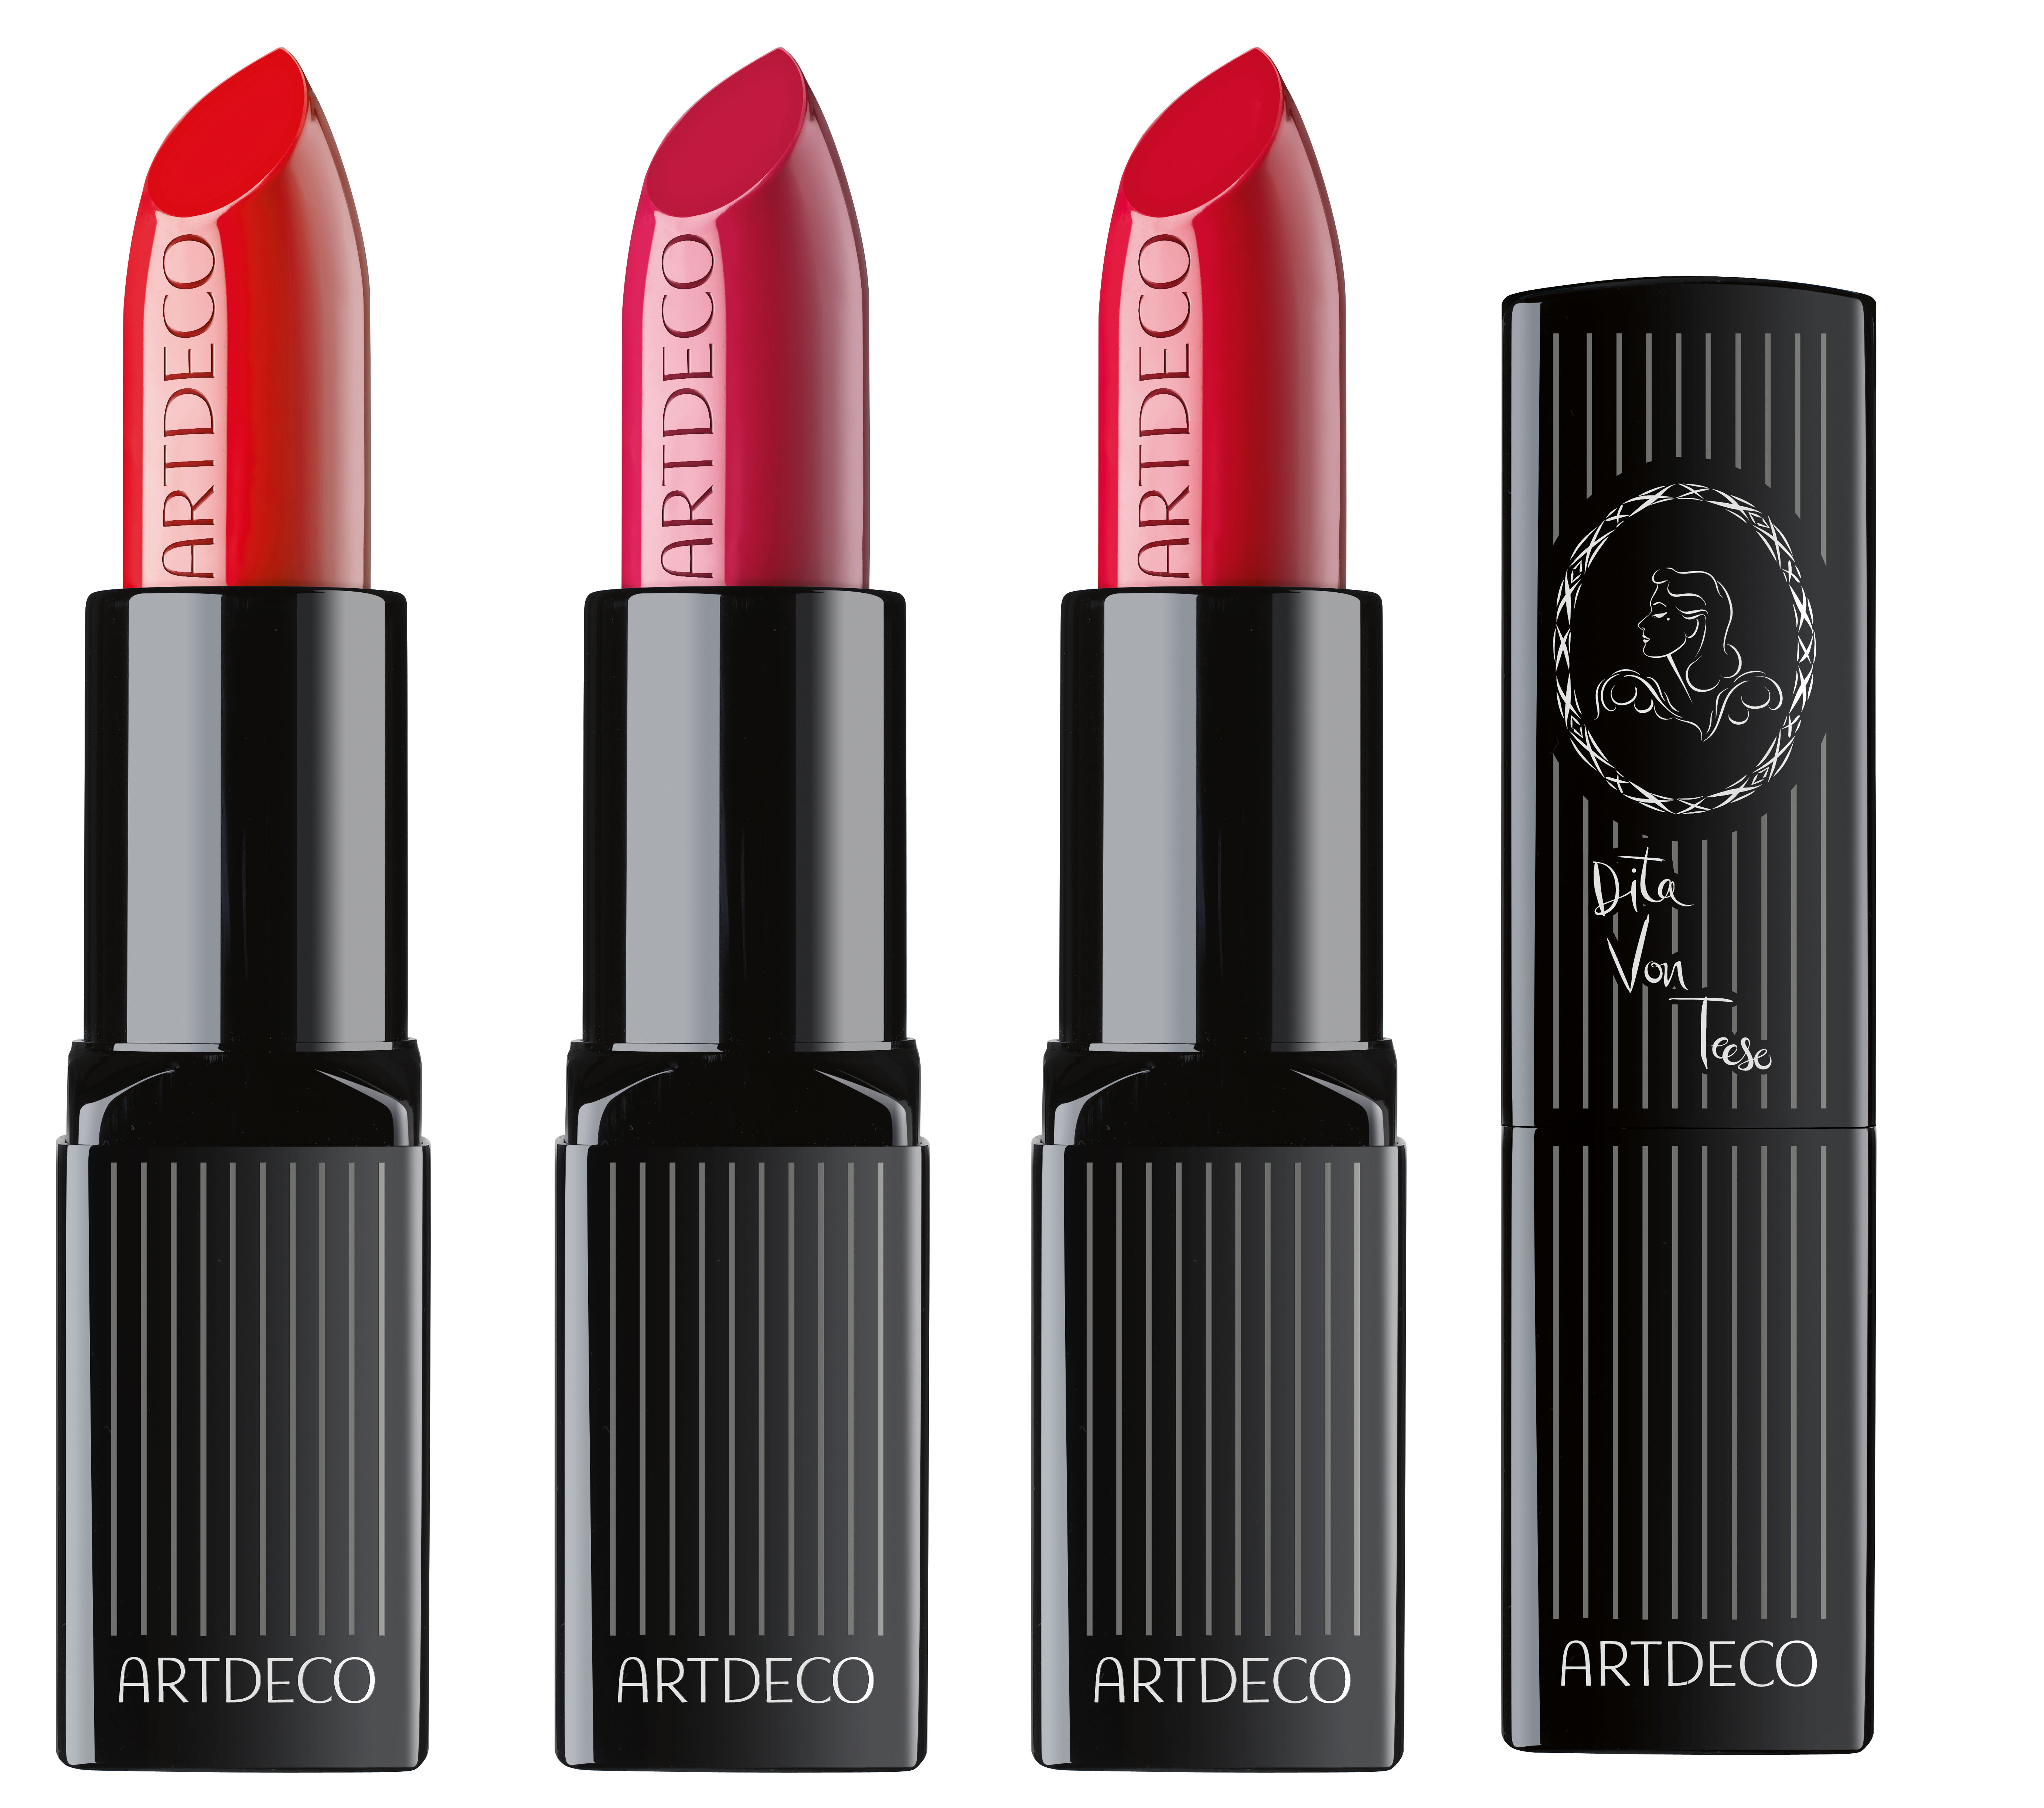 Artdeco Art Couture Lipstick Velvet “Dita” (fot. serwis prasowy)